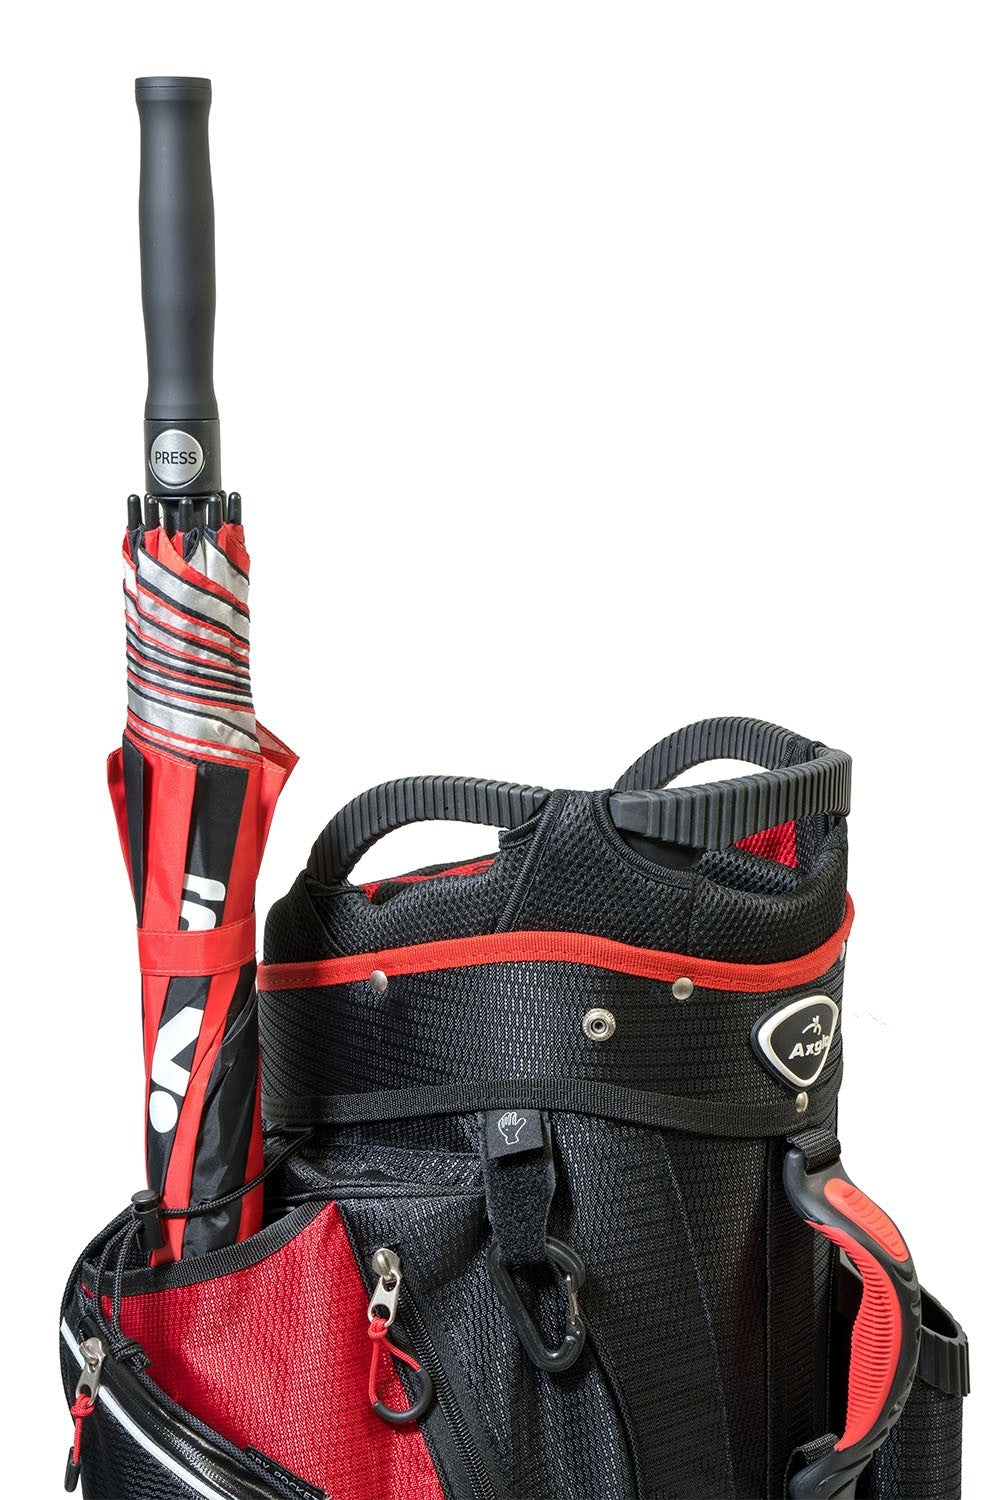 Axglo Golf Cart Bag - Red/Black - umbrella holder